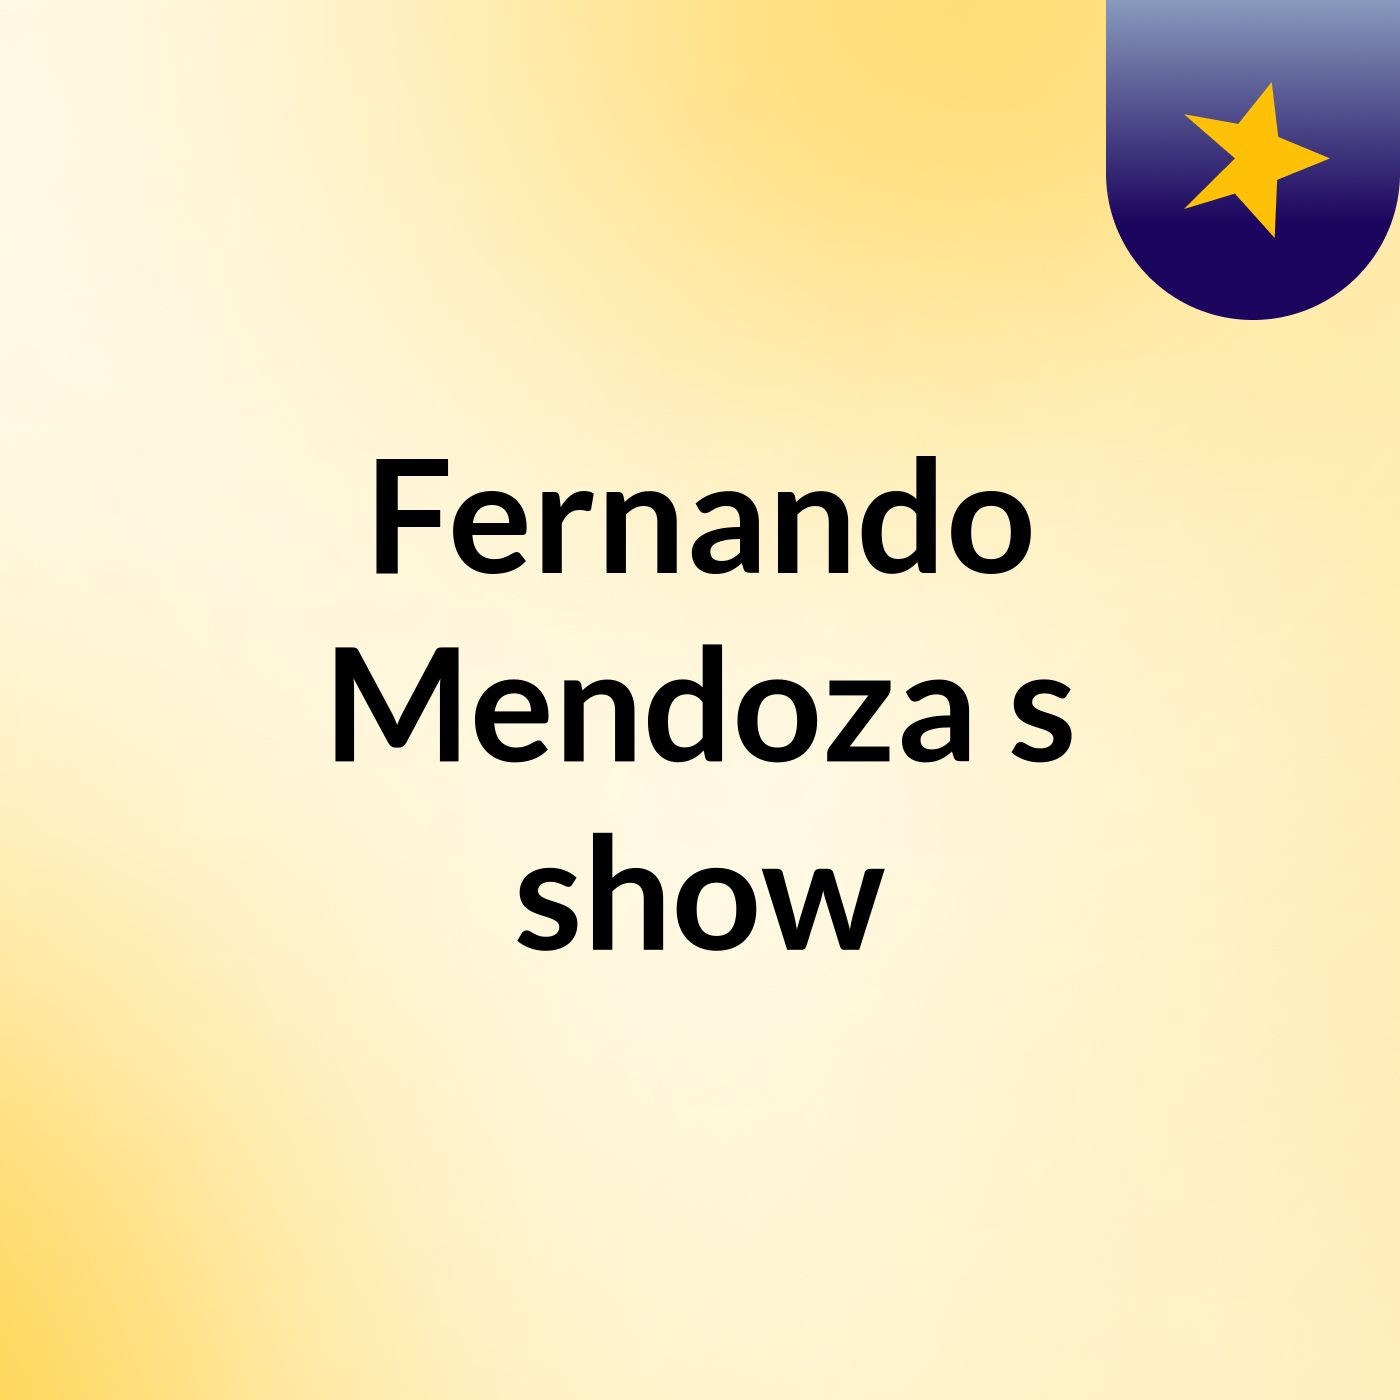 Fernando Mendoza's show